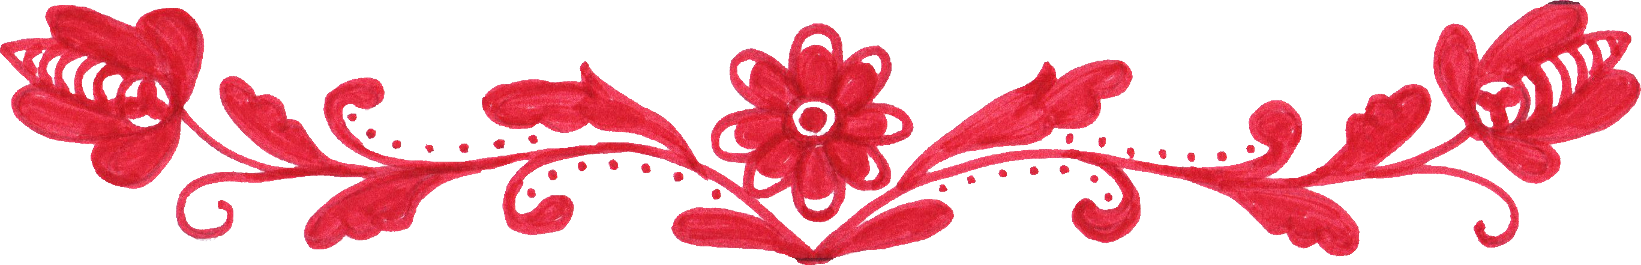 Free Download - Red Flower Border Design (1641x265)